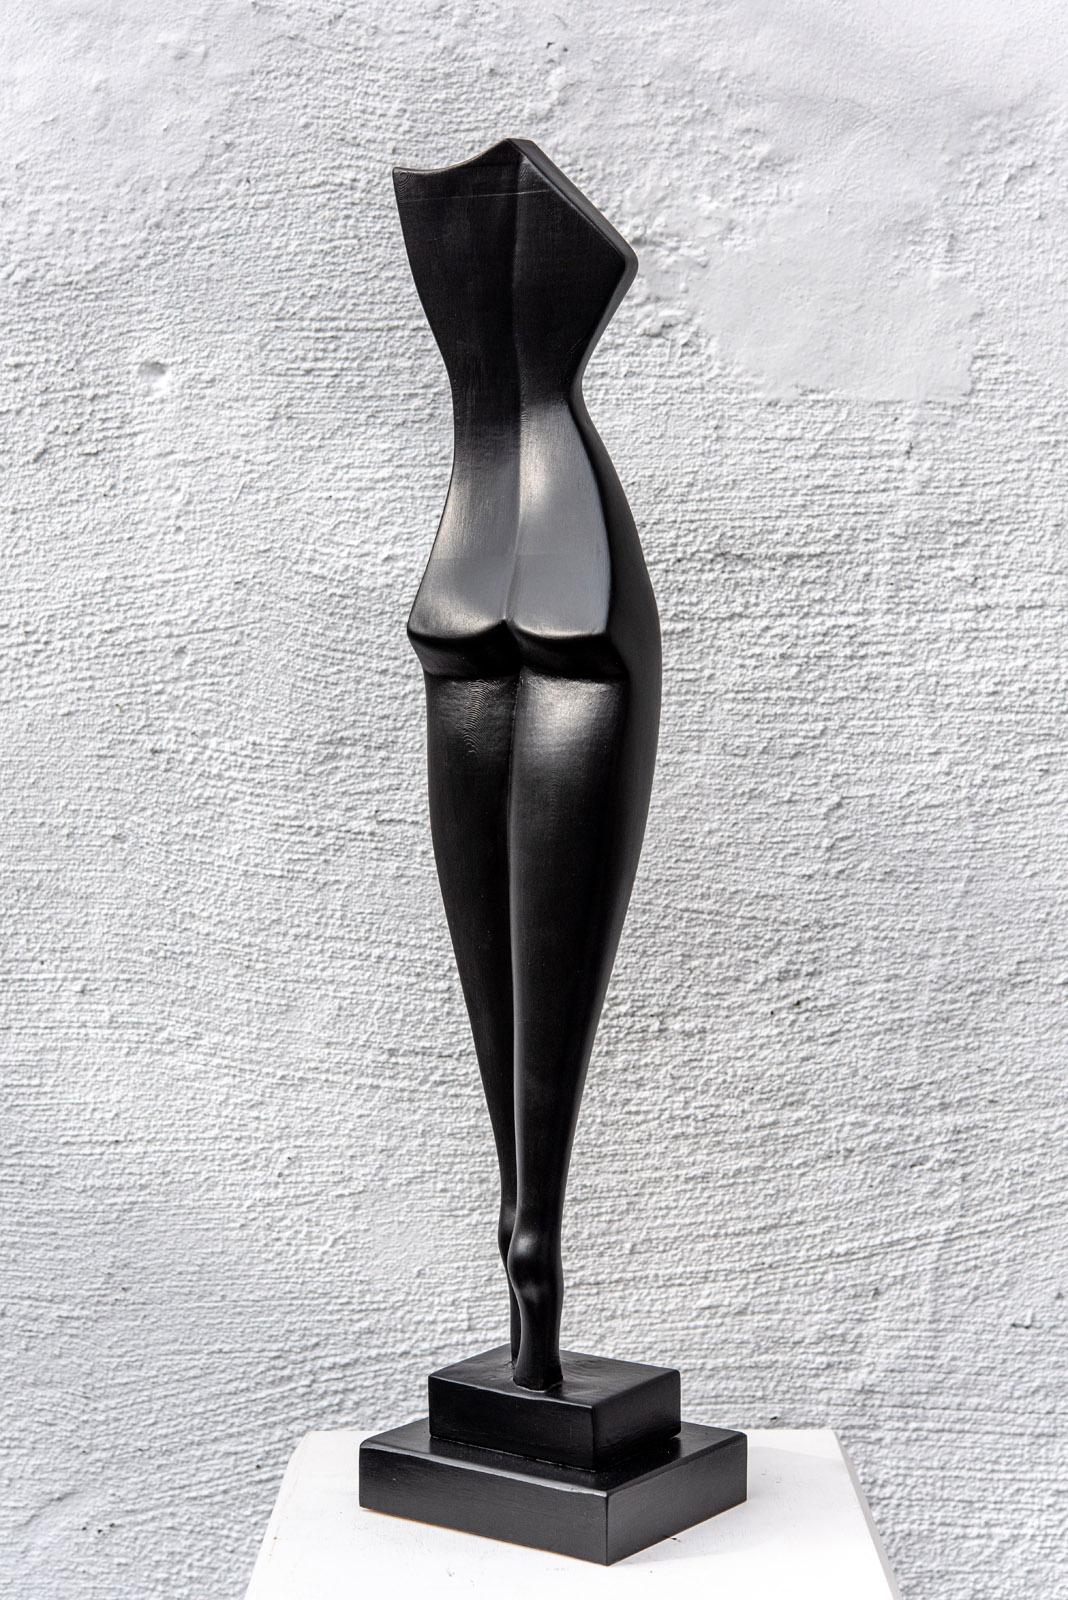 Elegance - Sculpture by Larry Scaturro